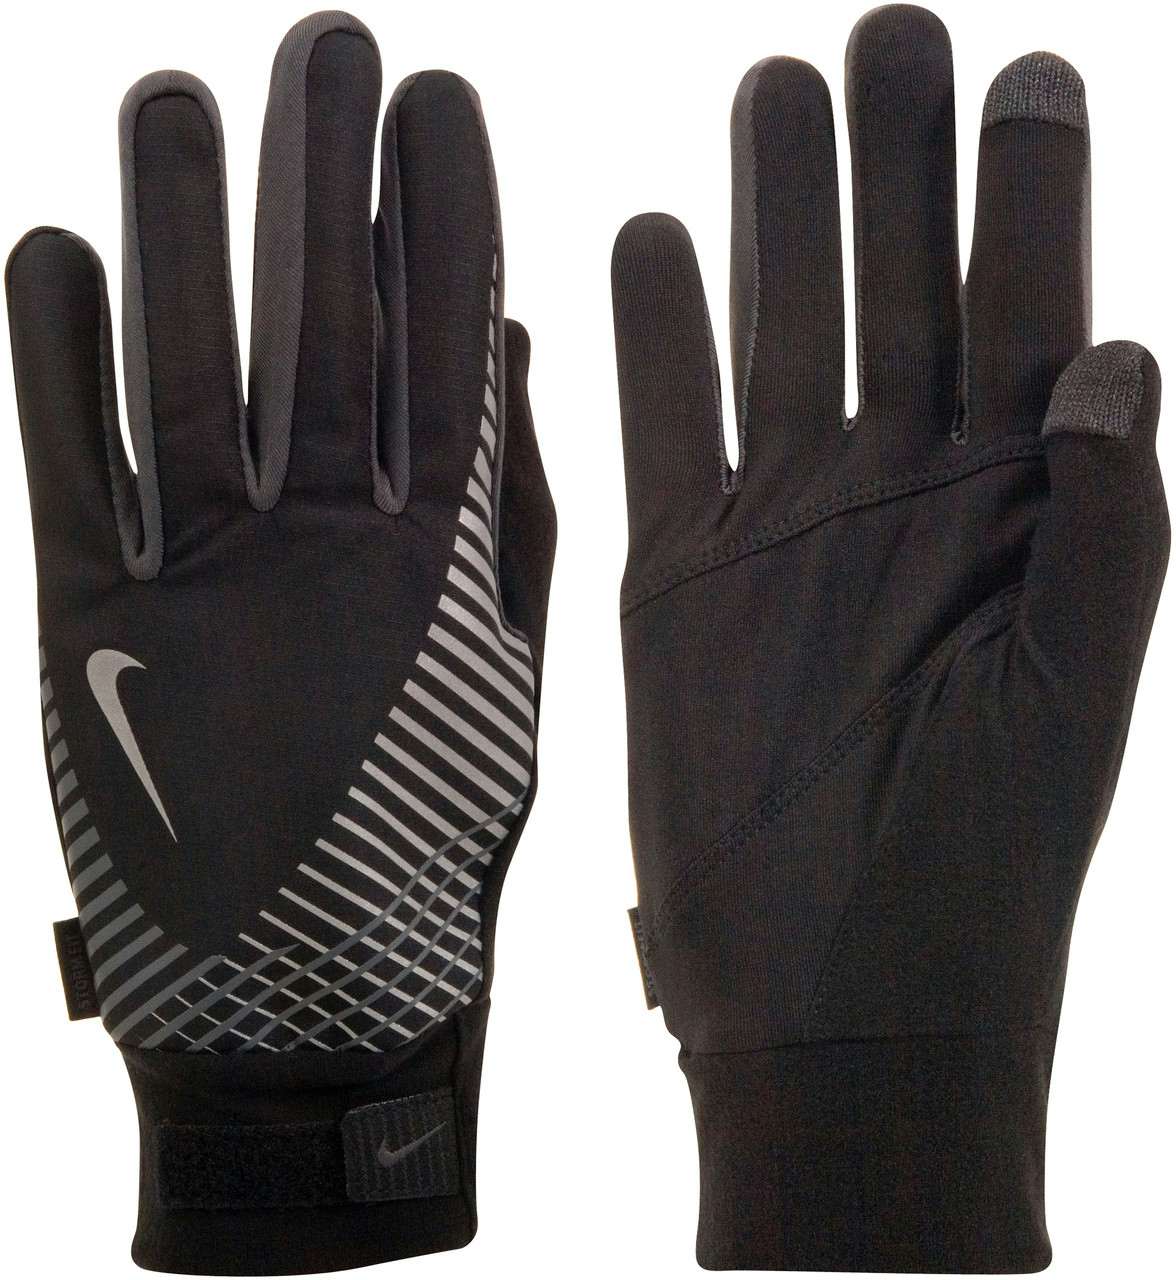 Elite Storm Fit Tech Run Gloves Black/Anthracite